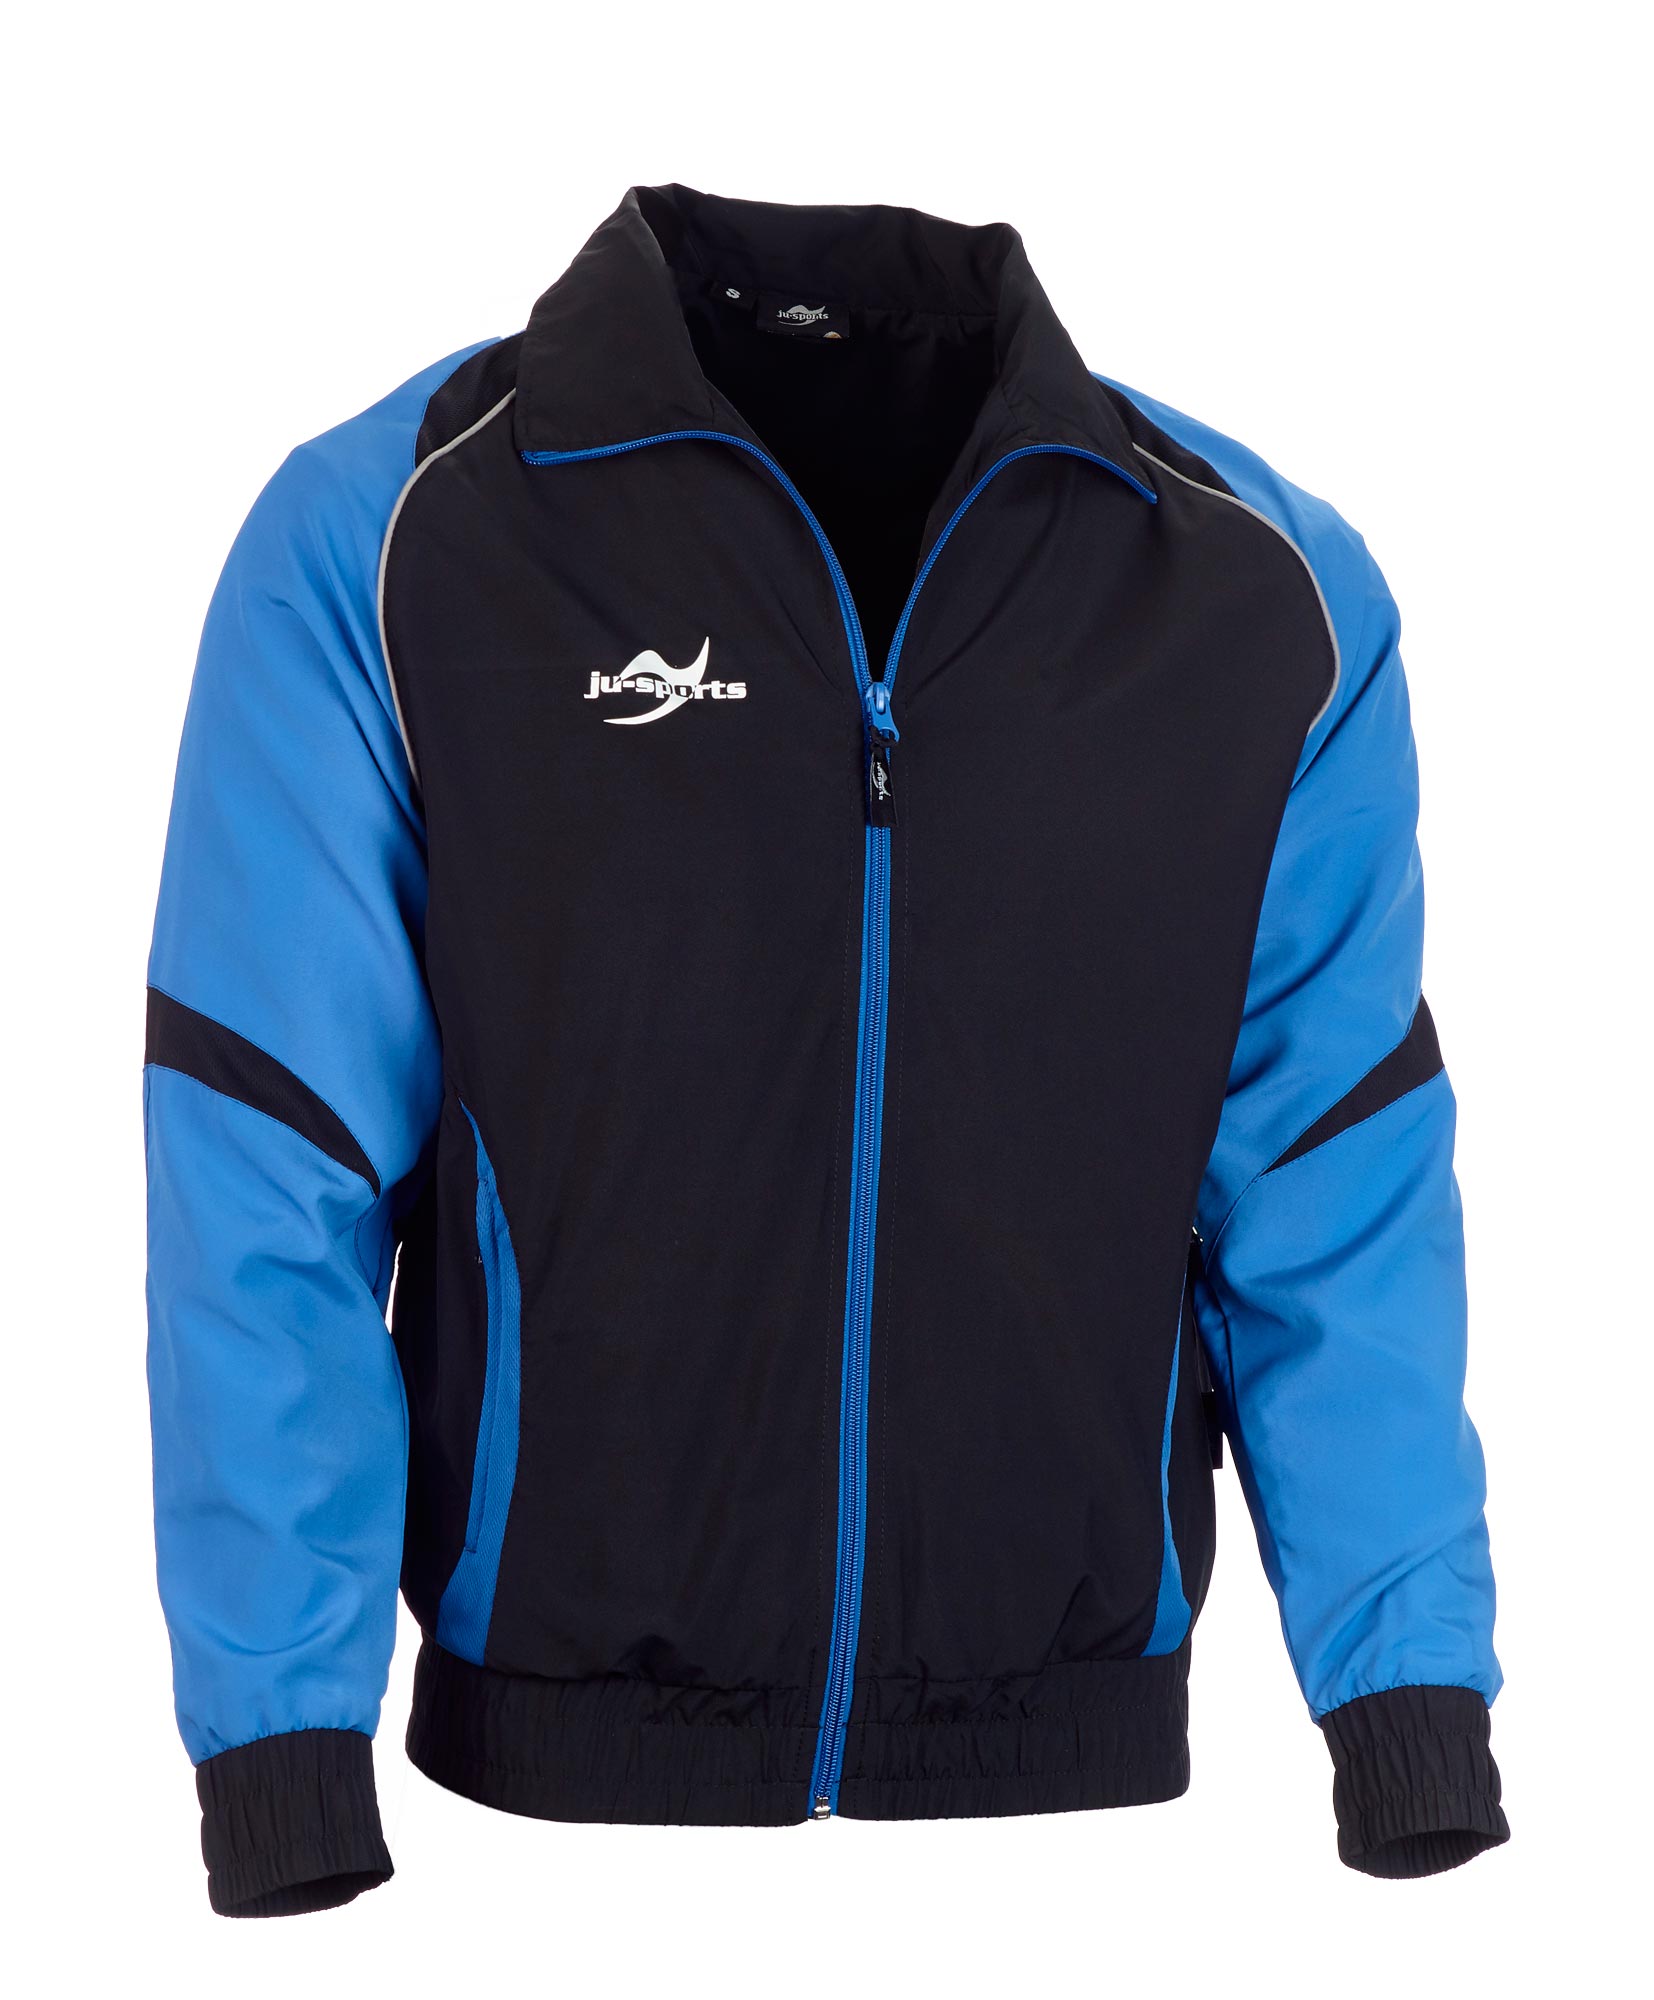 Ju-Sports C2 zip-up team jacket black/blue